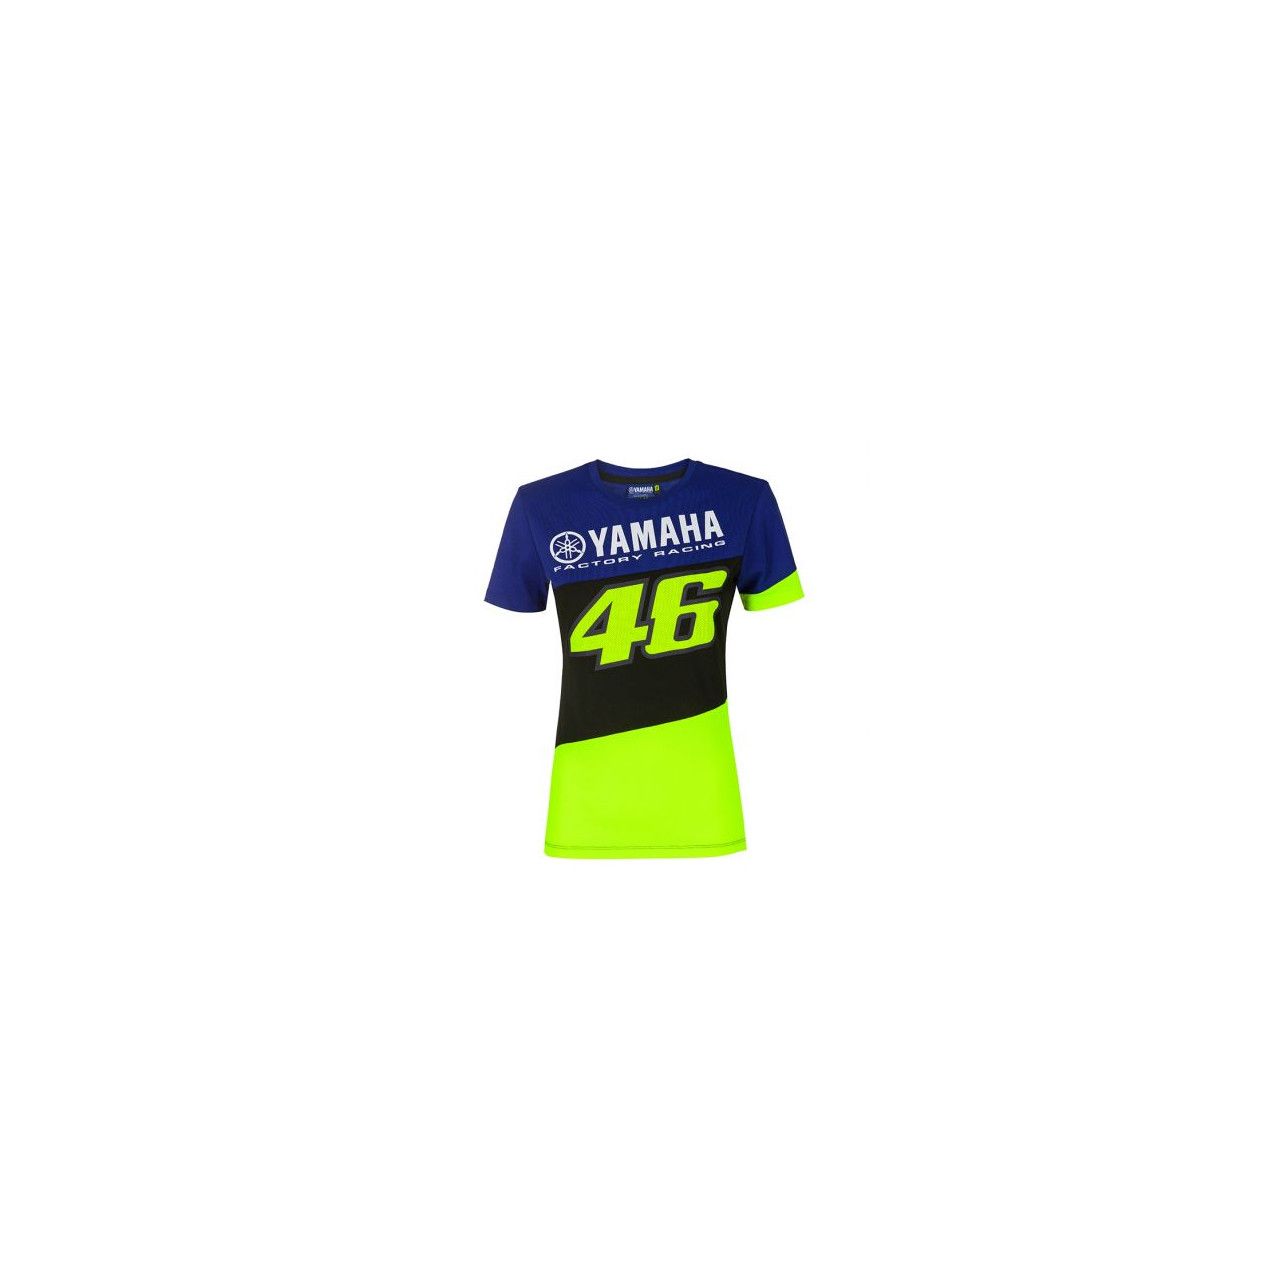 YAMAHA T-shirt femme Racing VR46